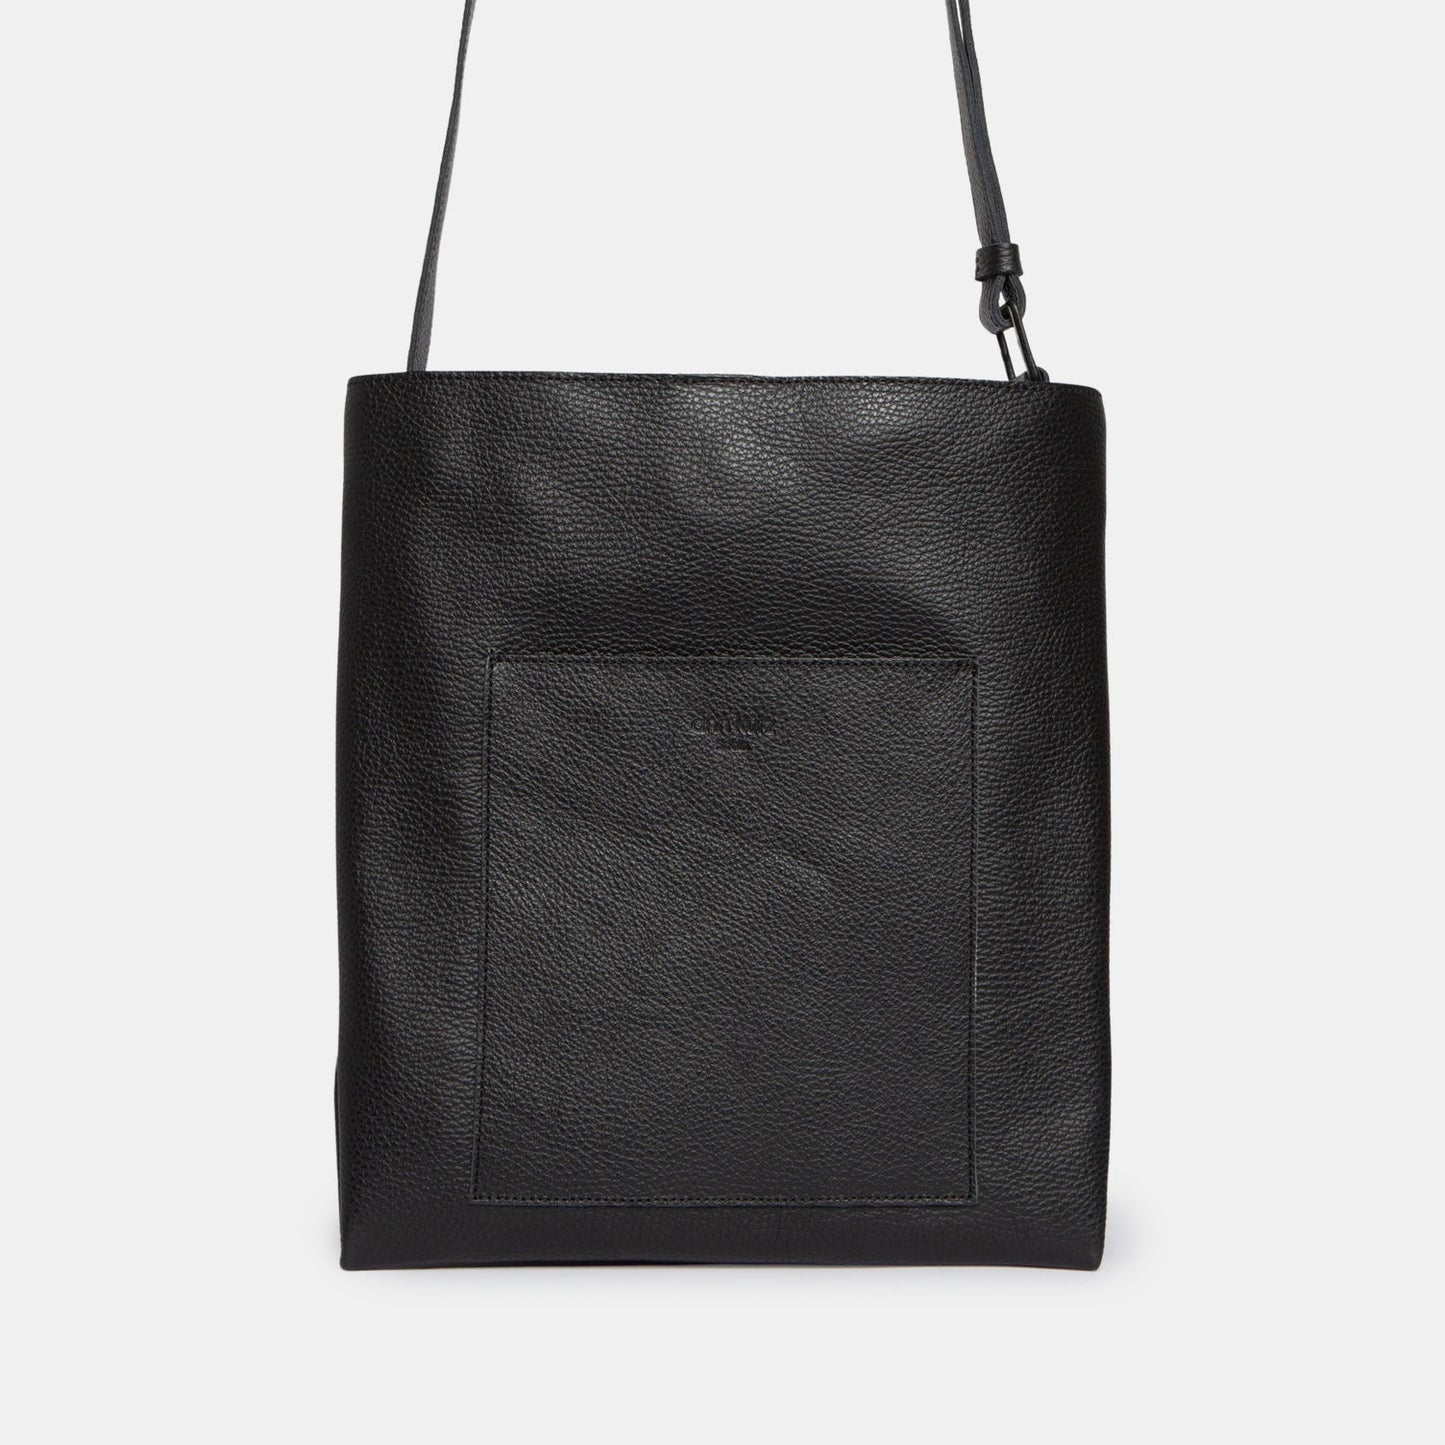 ann kurz Outstanding Pocket Large Shopper Bag | New -Grain Black- ann kurz